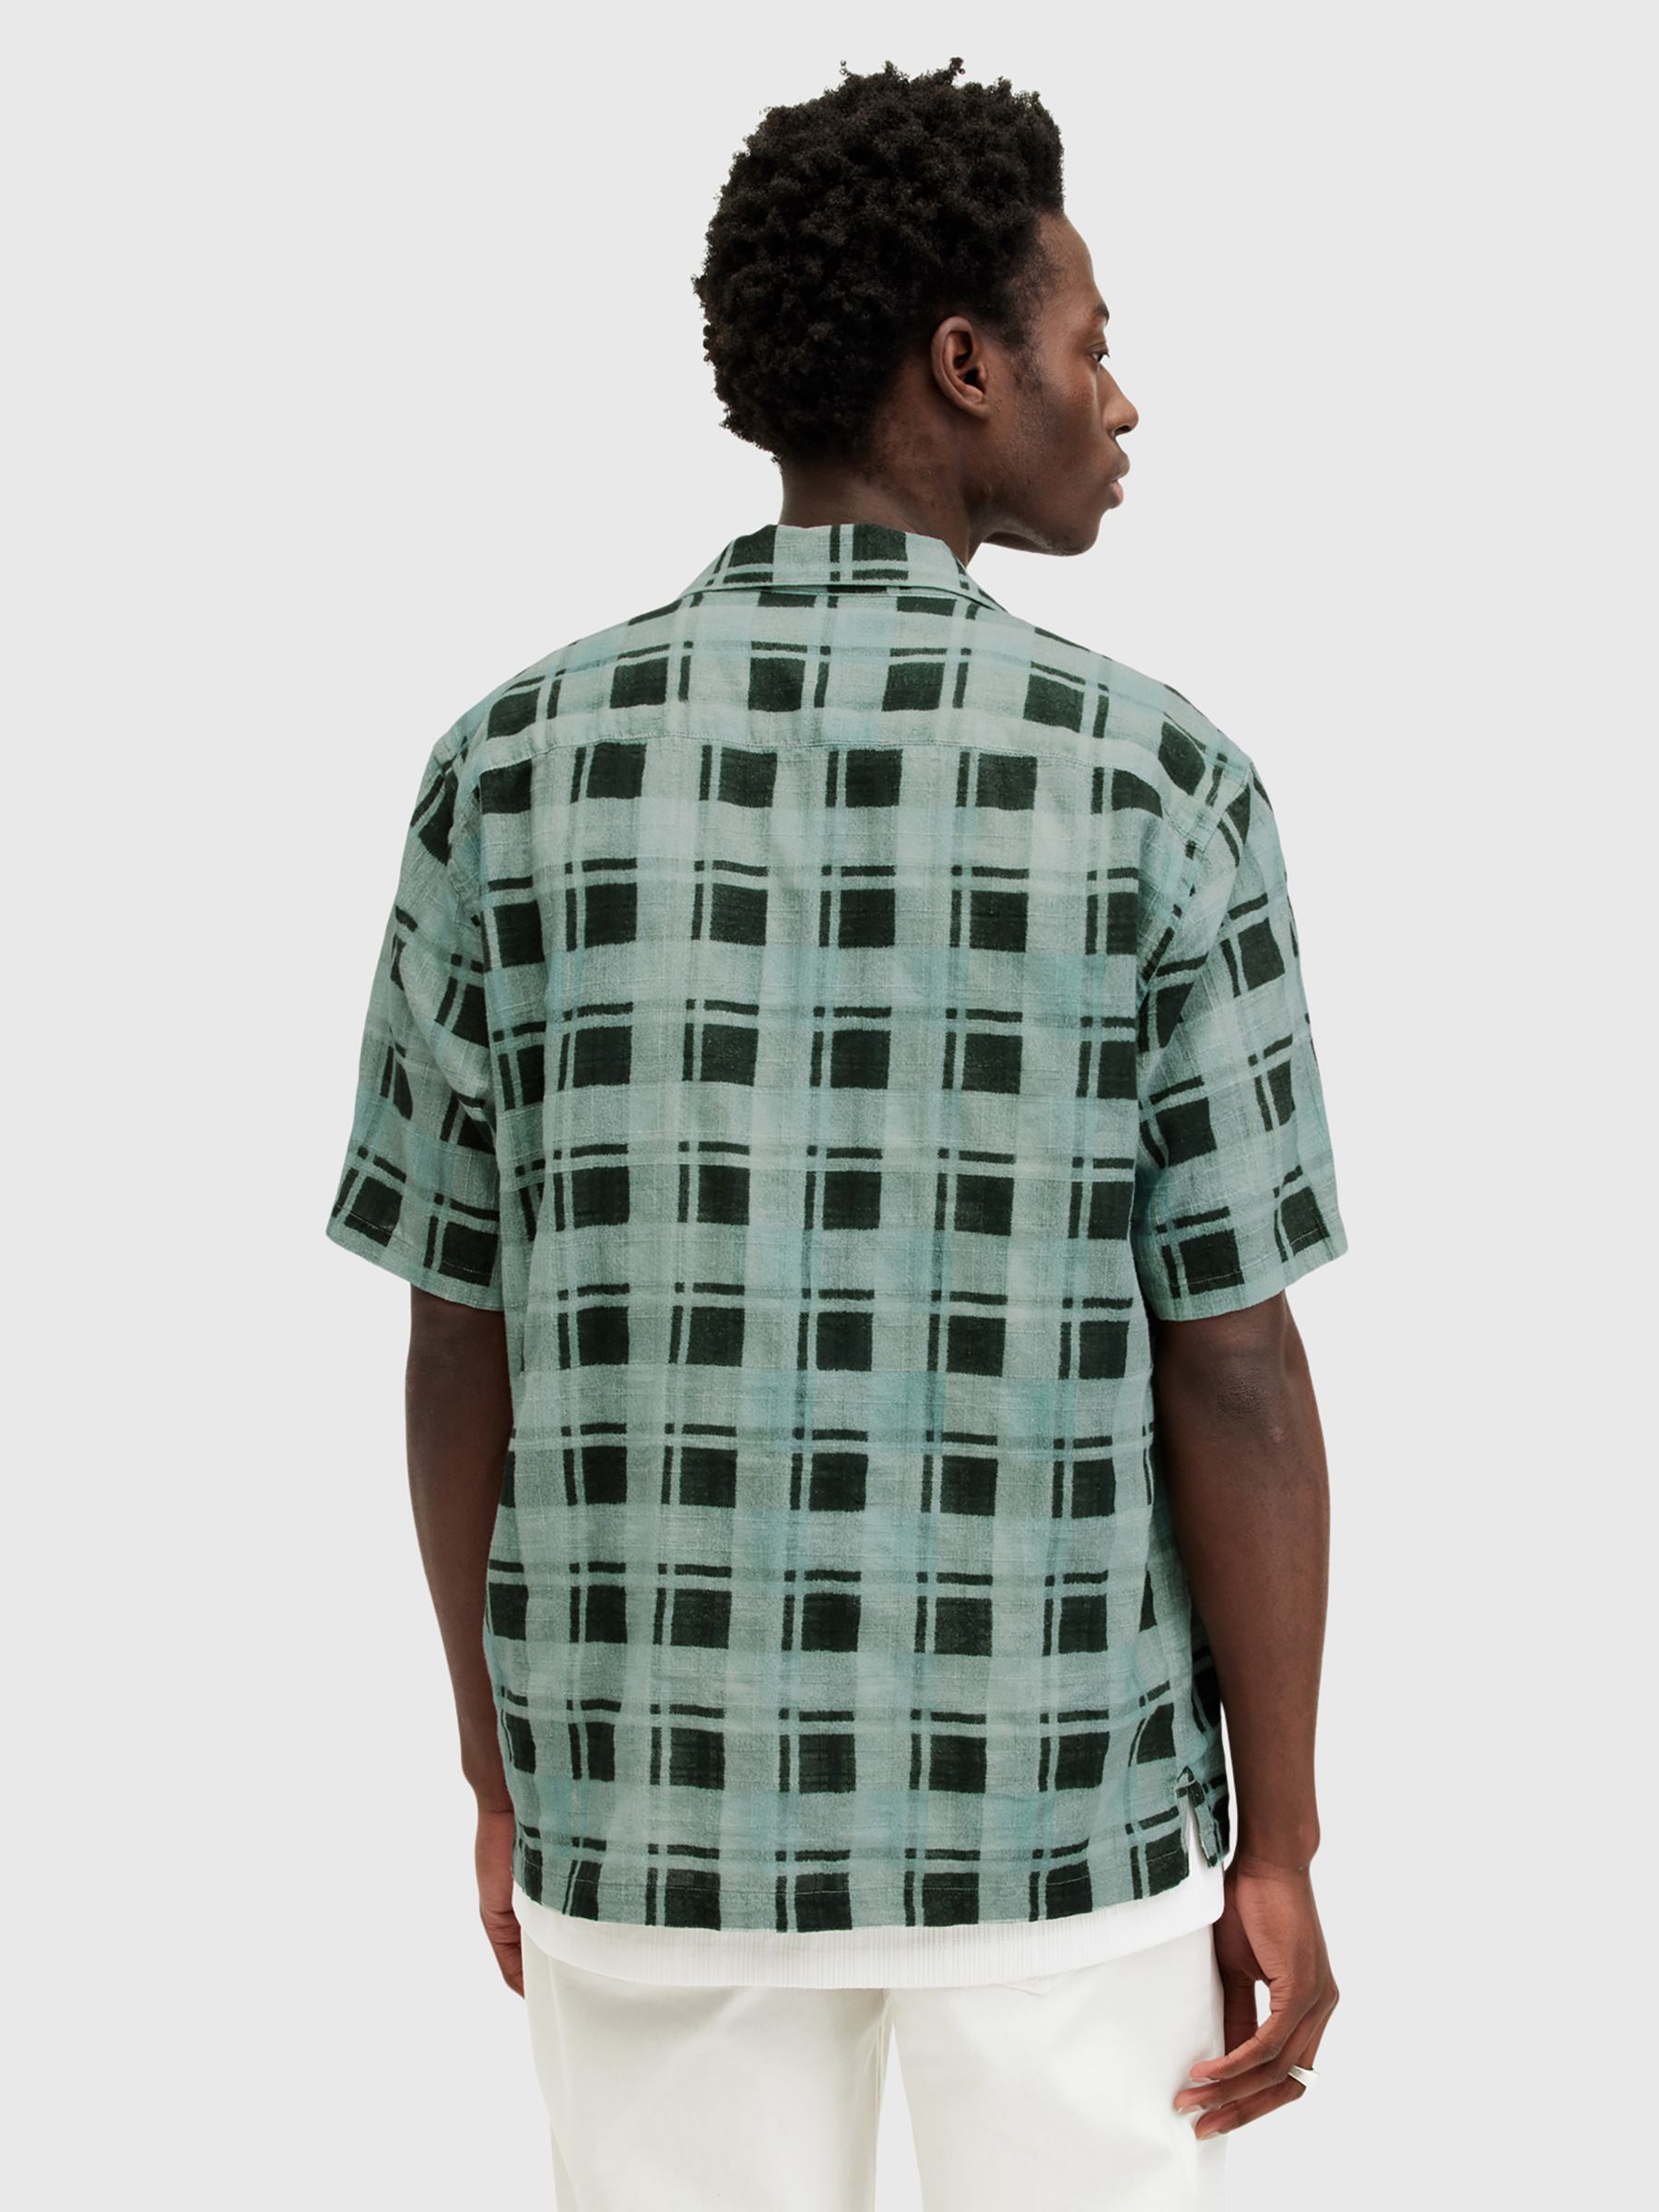 AllSaints Big Sur Organic Cotton Blend Check Short Sleeve Shirt, Shamrock Green, XL